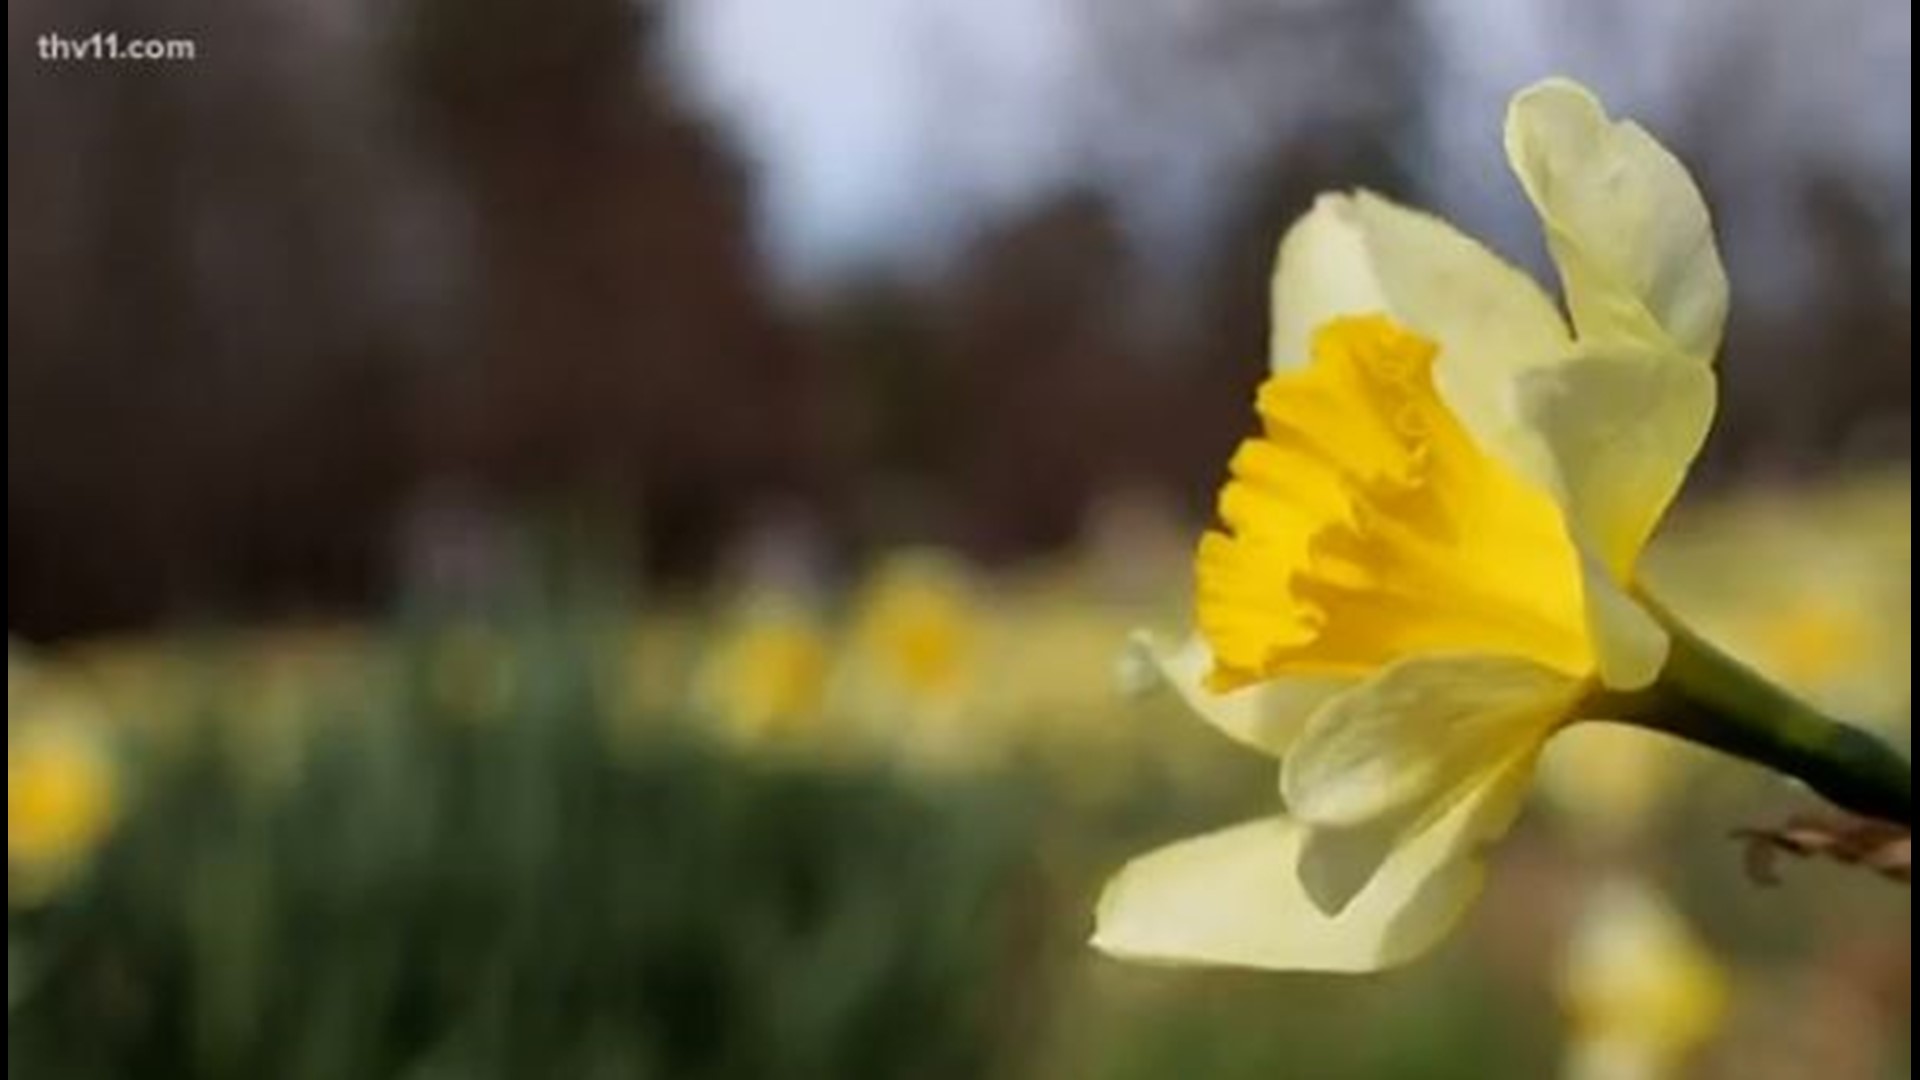 The Wye Daffodil Festival is in full bloom in Arkansas.